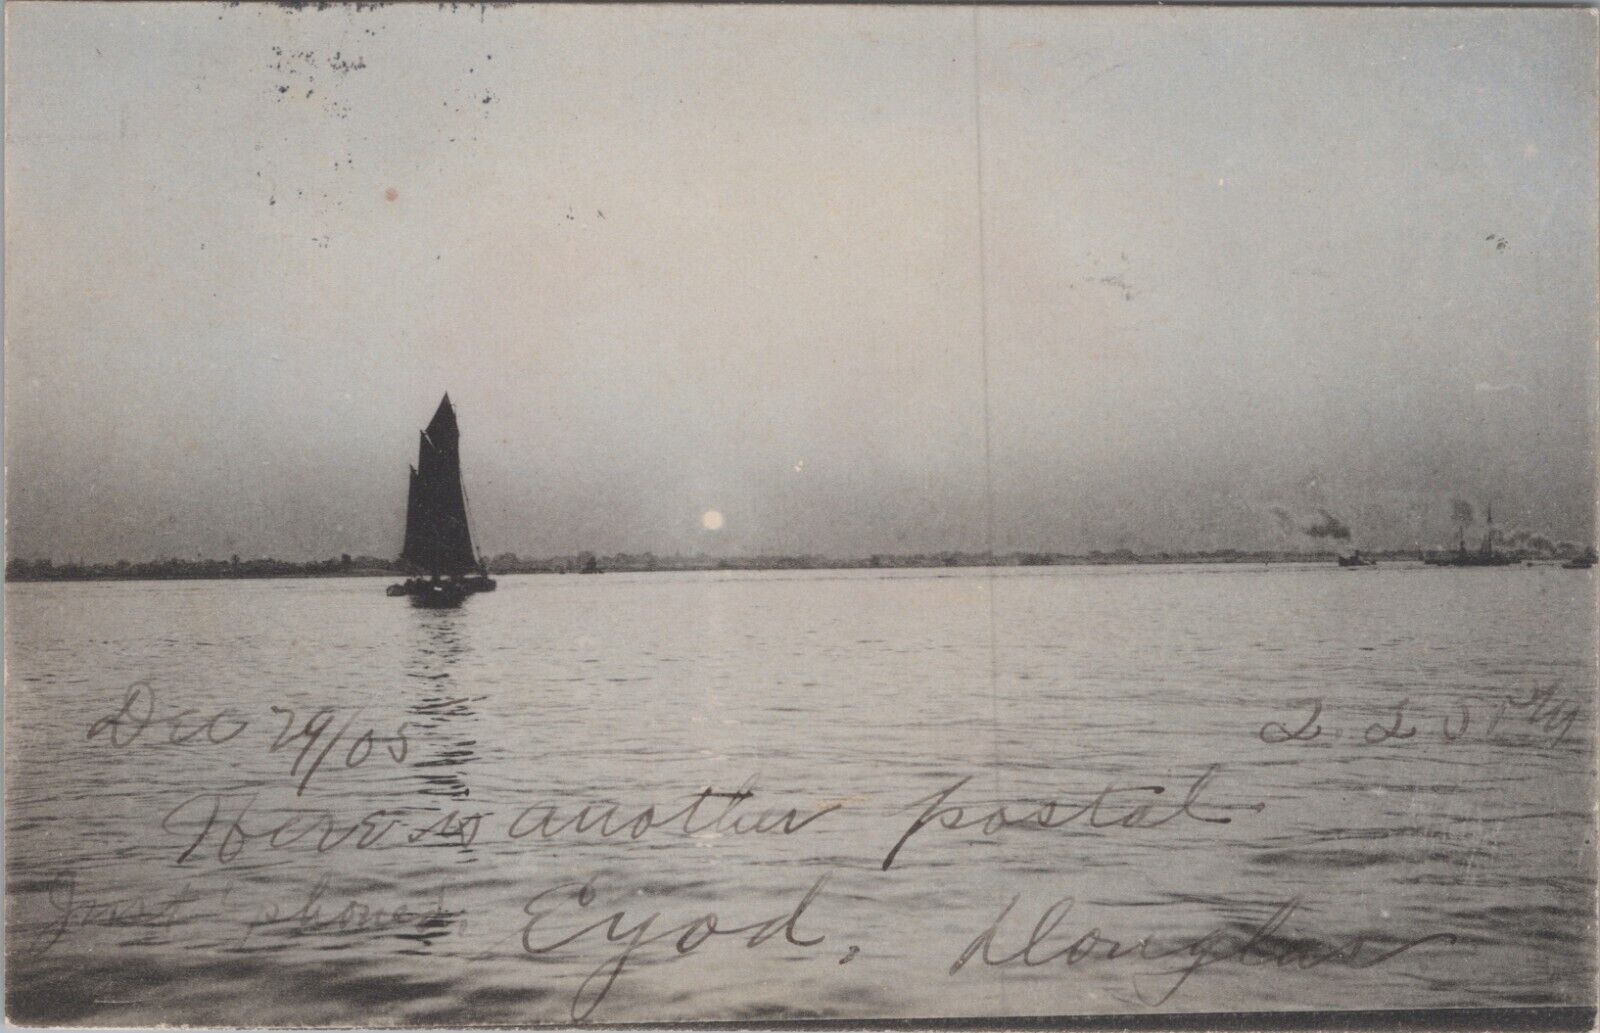 1905 Postcard Sailboat at Dusk Addressed to Long Island, NY 4794.3.5 MR ALE